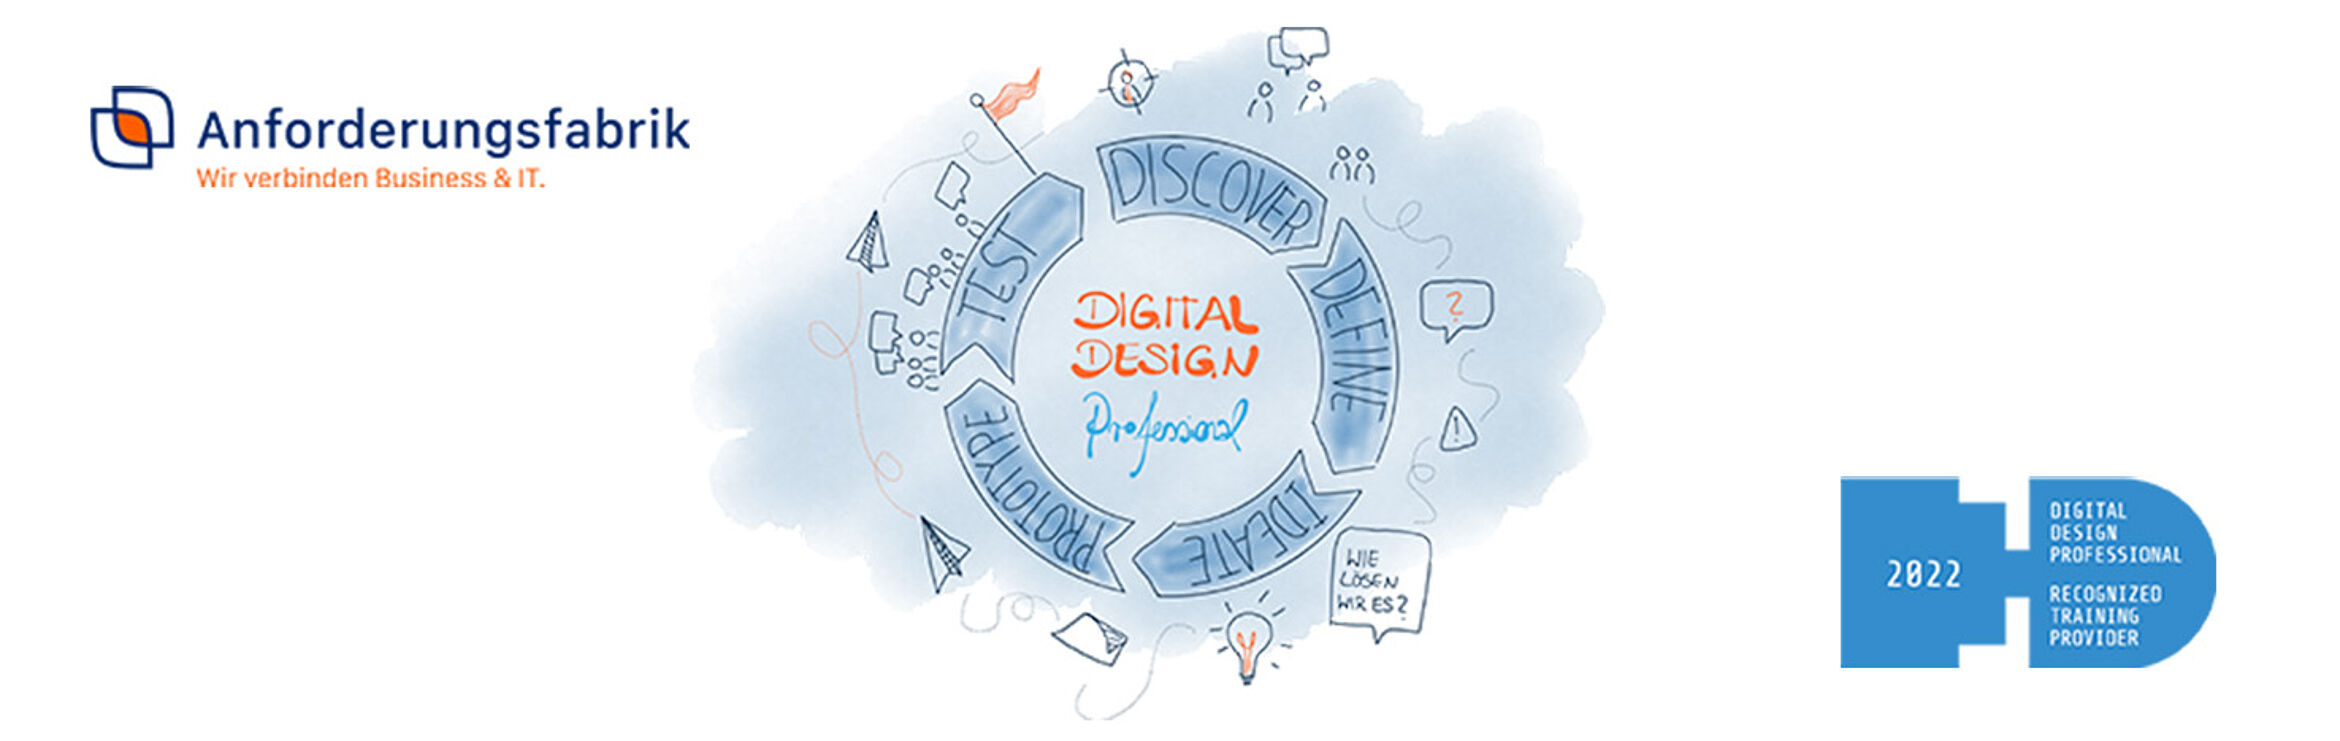 Iterativer Digital Design Prozess